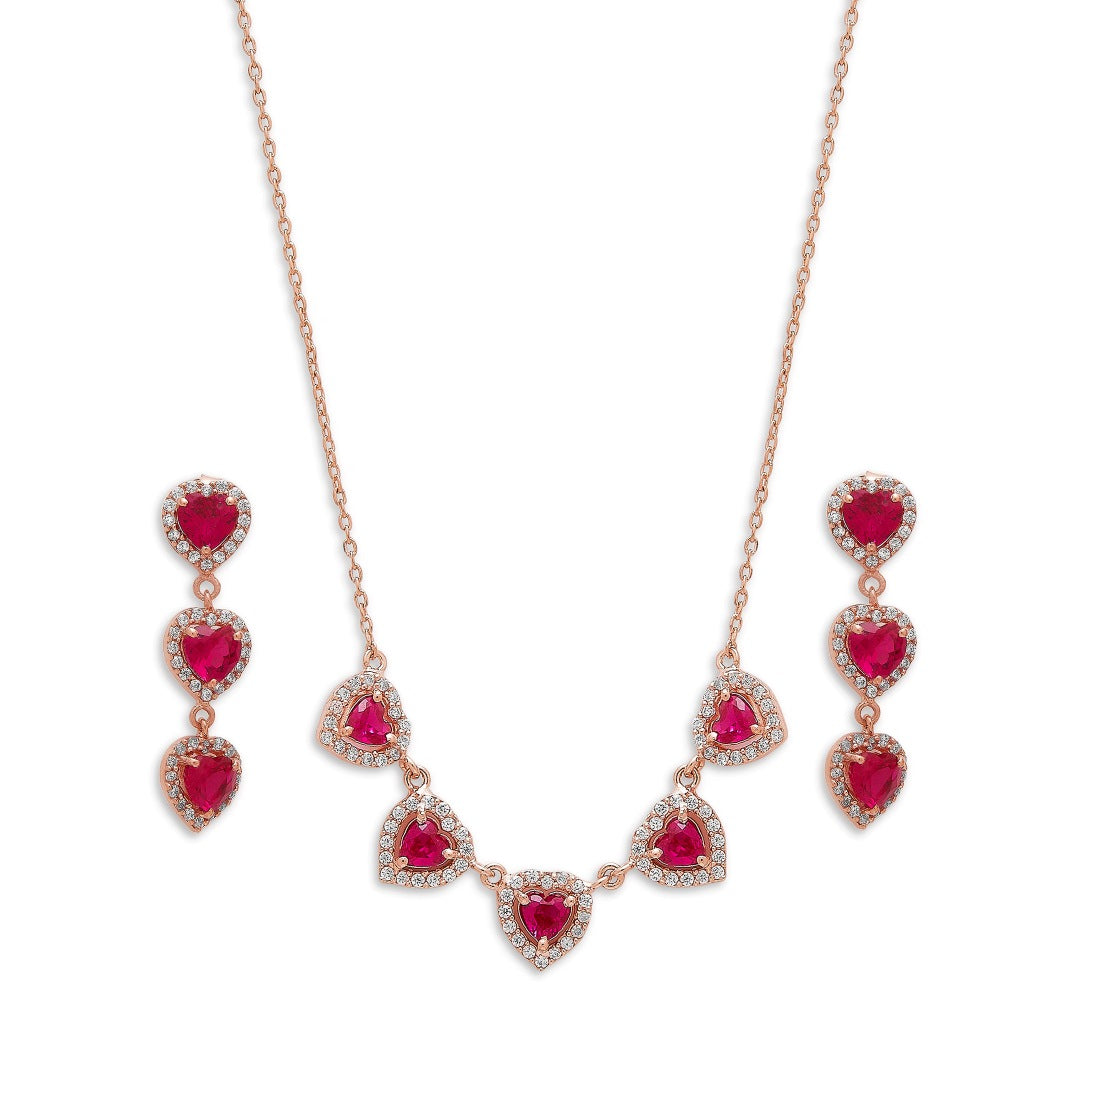 Heartfelt Elegance Rose Gold-Plated 925 Sterling Silver Jewelry Set